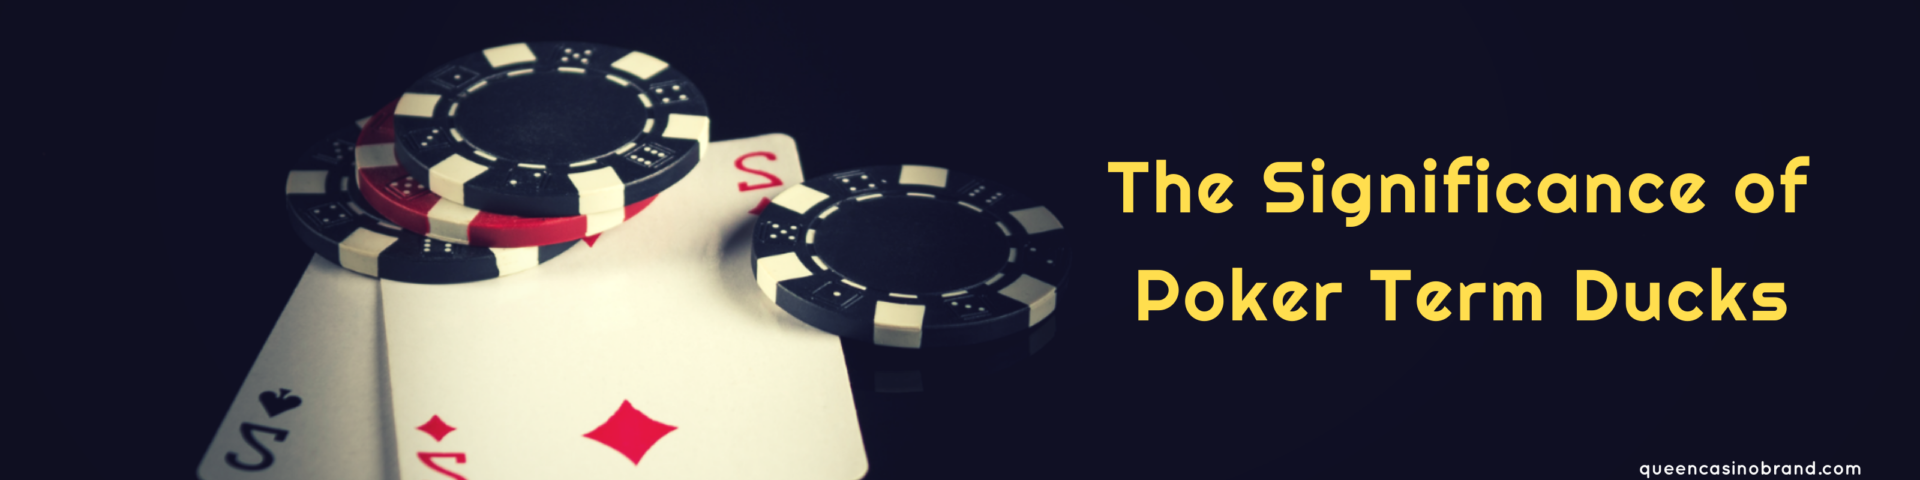 The Significance of Poker Term Ducks - Queen Casino Brand